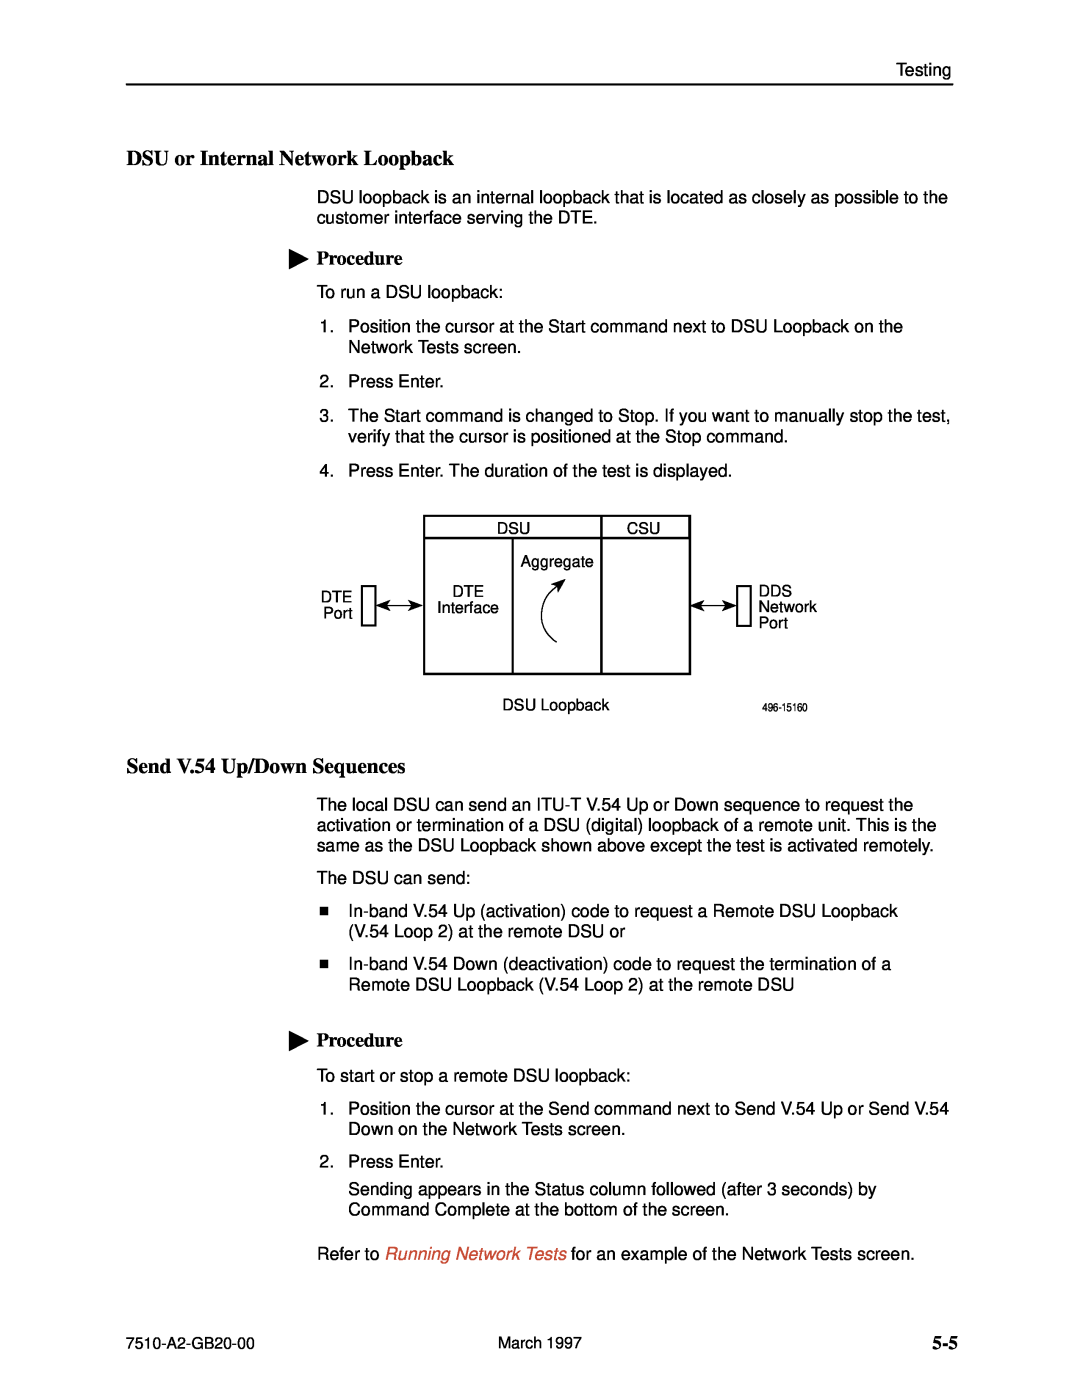 Paradyne 727 manual DSU or Internal Network Loopback, Send V.54 Up/Down Sequences, Procedure 